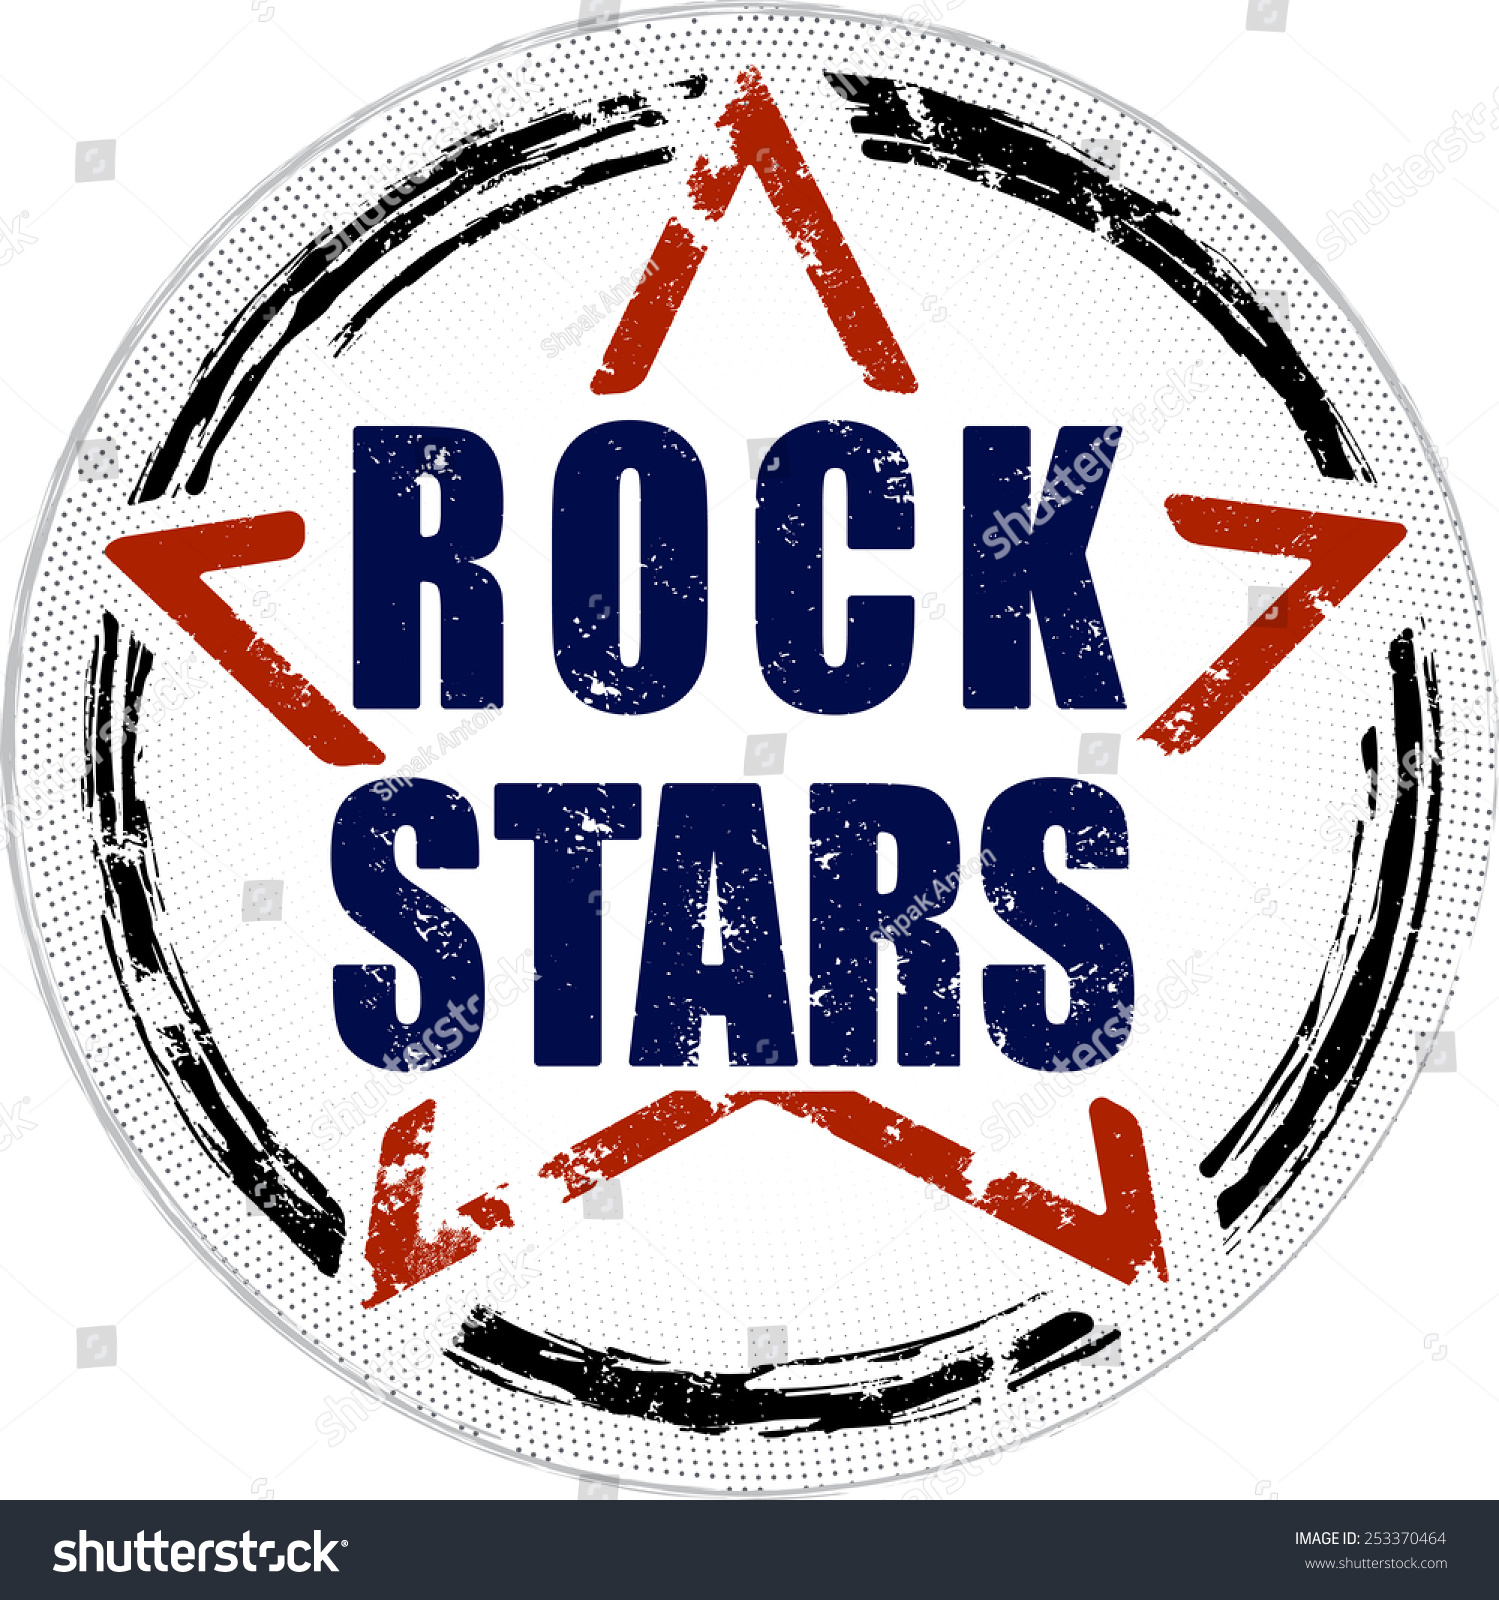 Edit Vectors Free Online - Rock stars | Shutterstock Editor